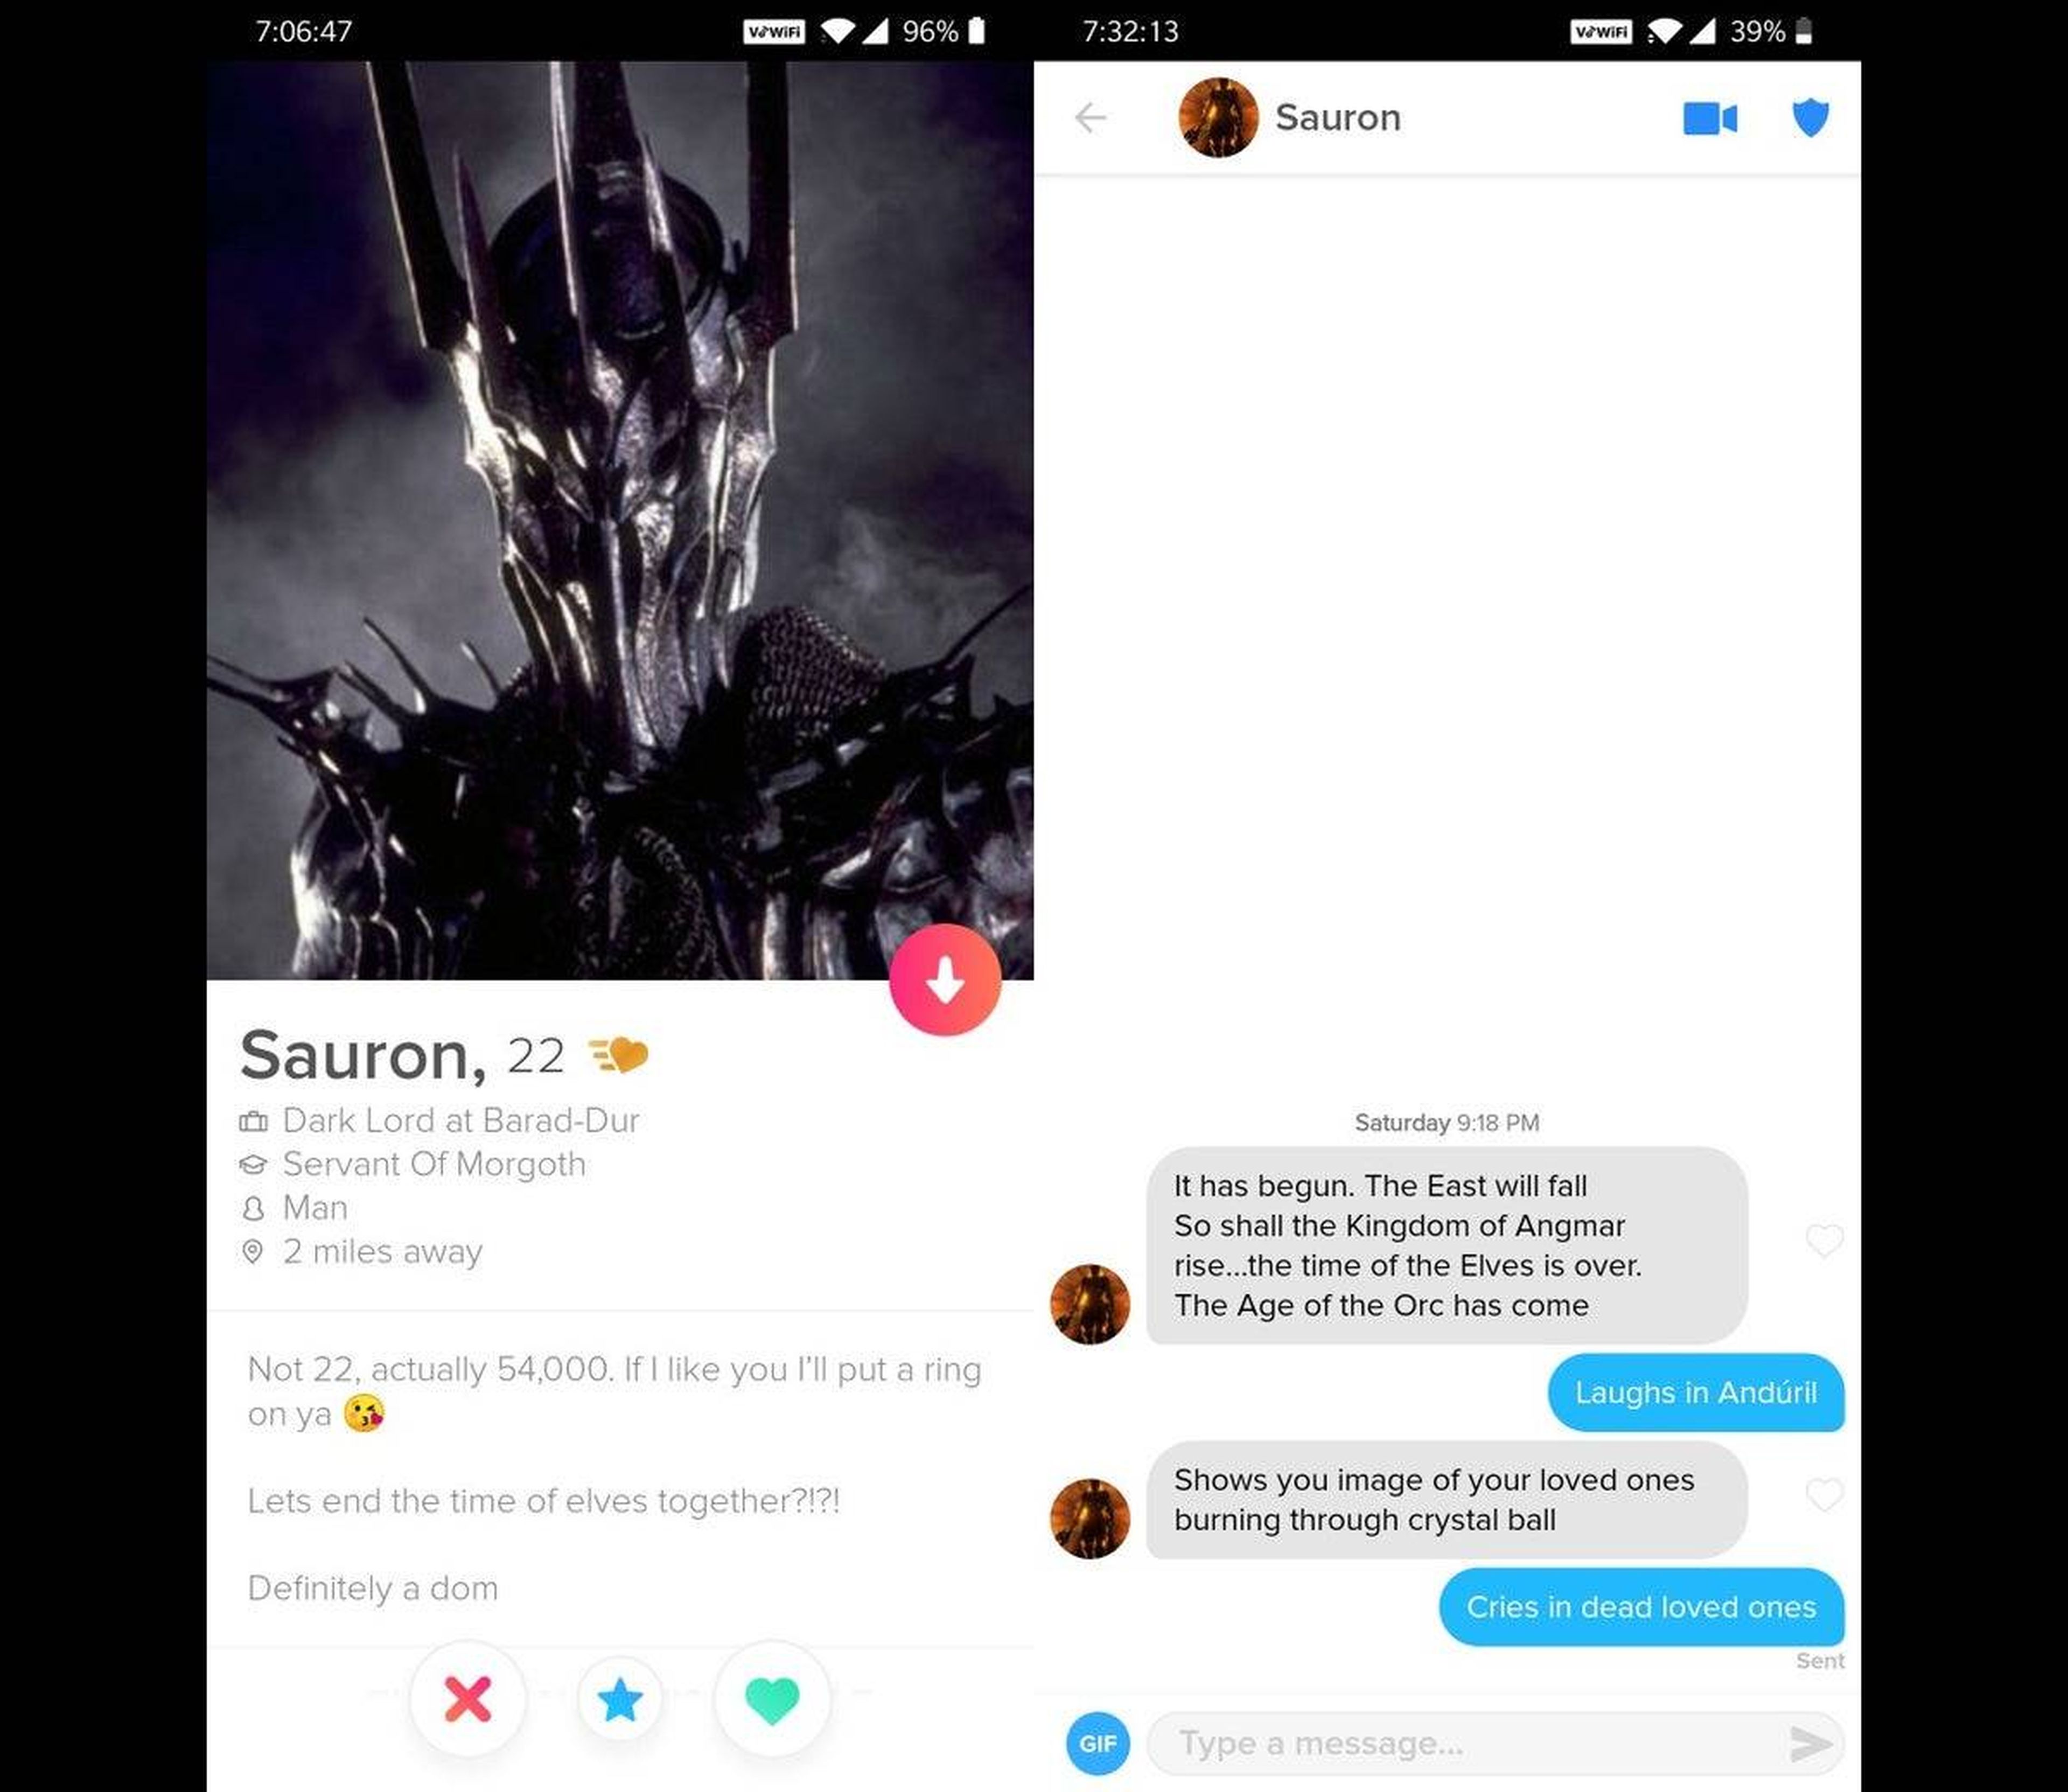 Sauron Tinder